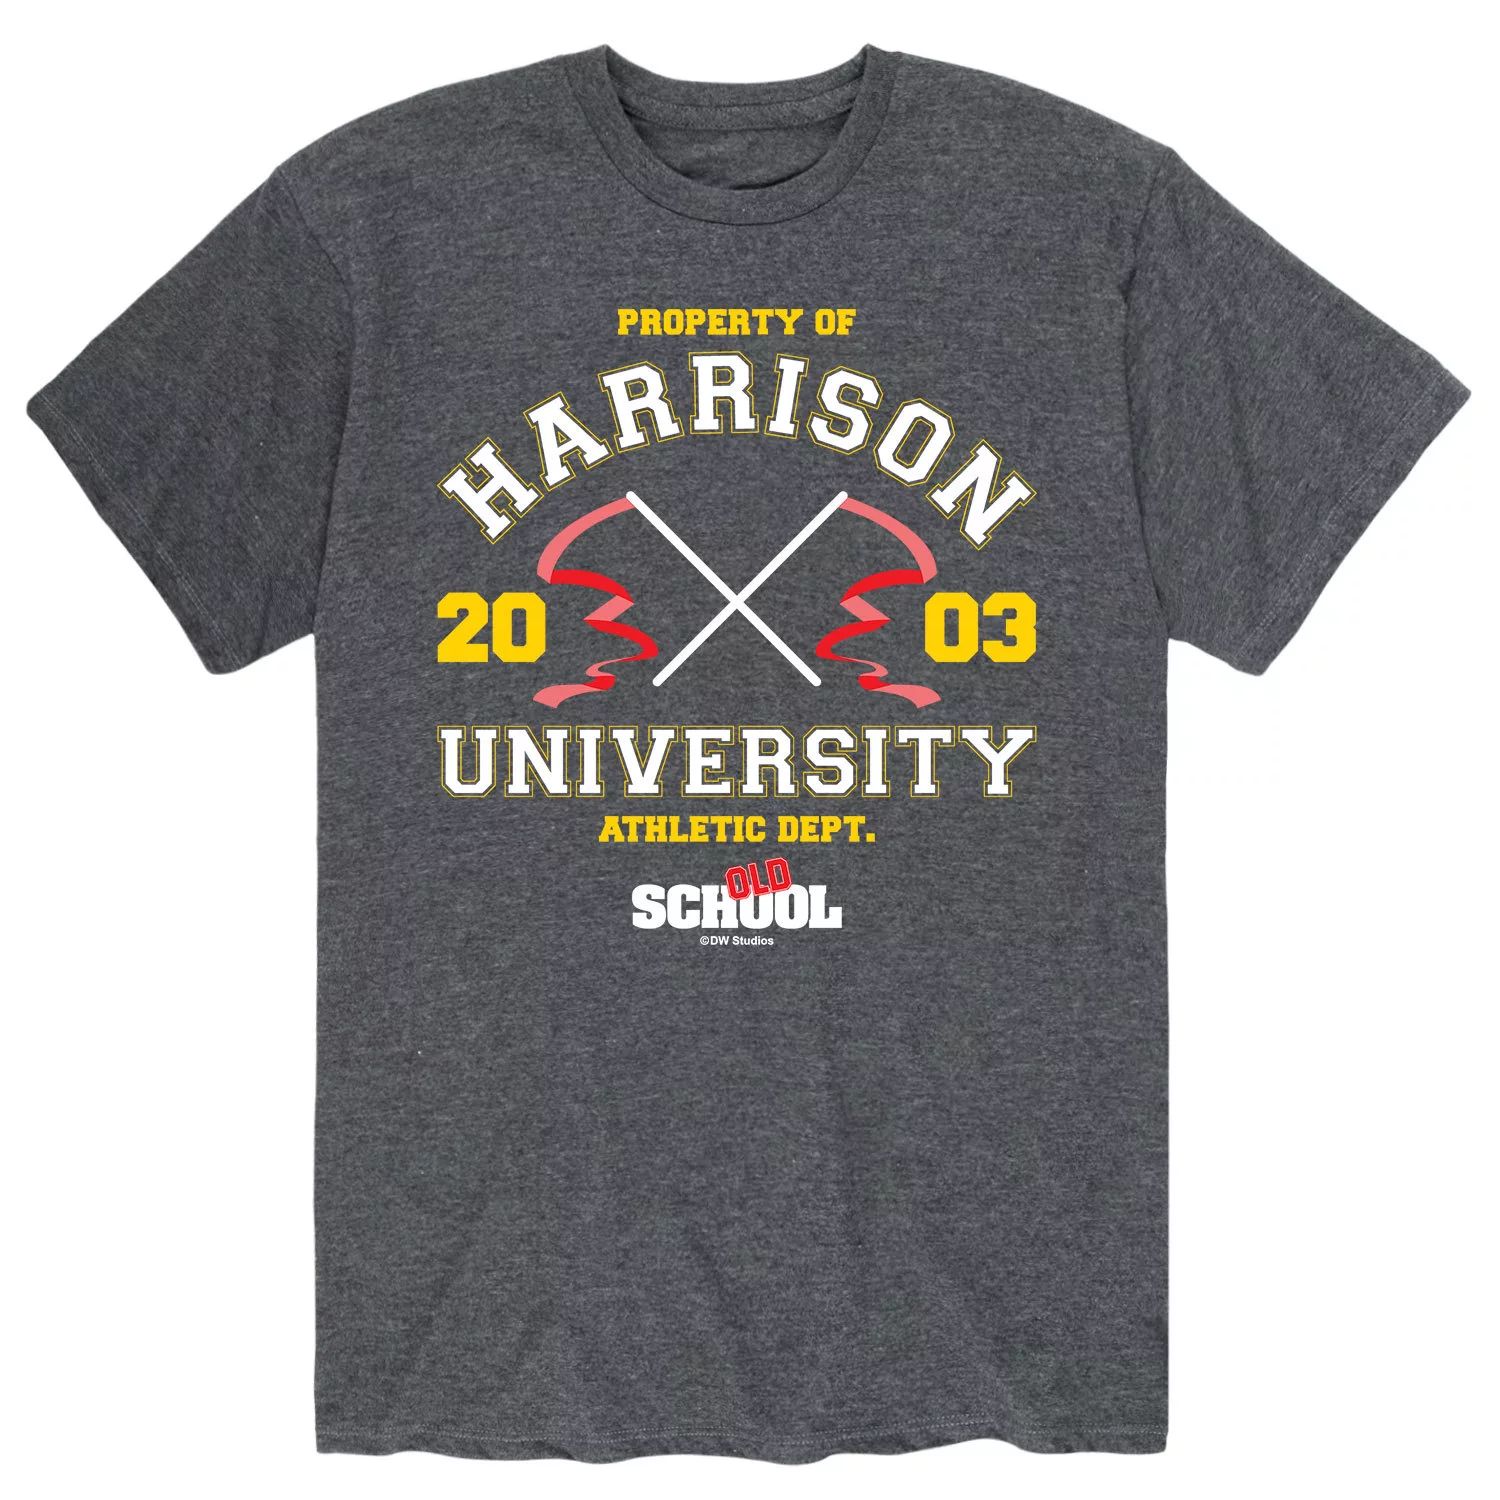 Мужская футболка Old School Harrison Athletic Dept. Licensed Character harrison kate old school ties